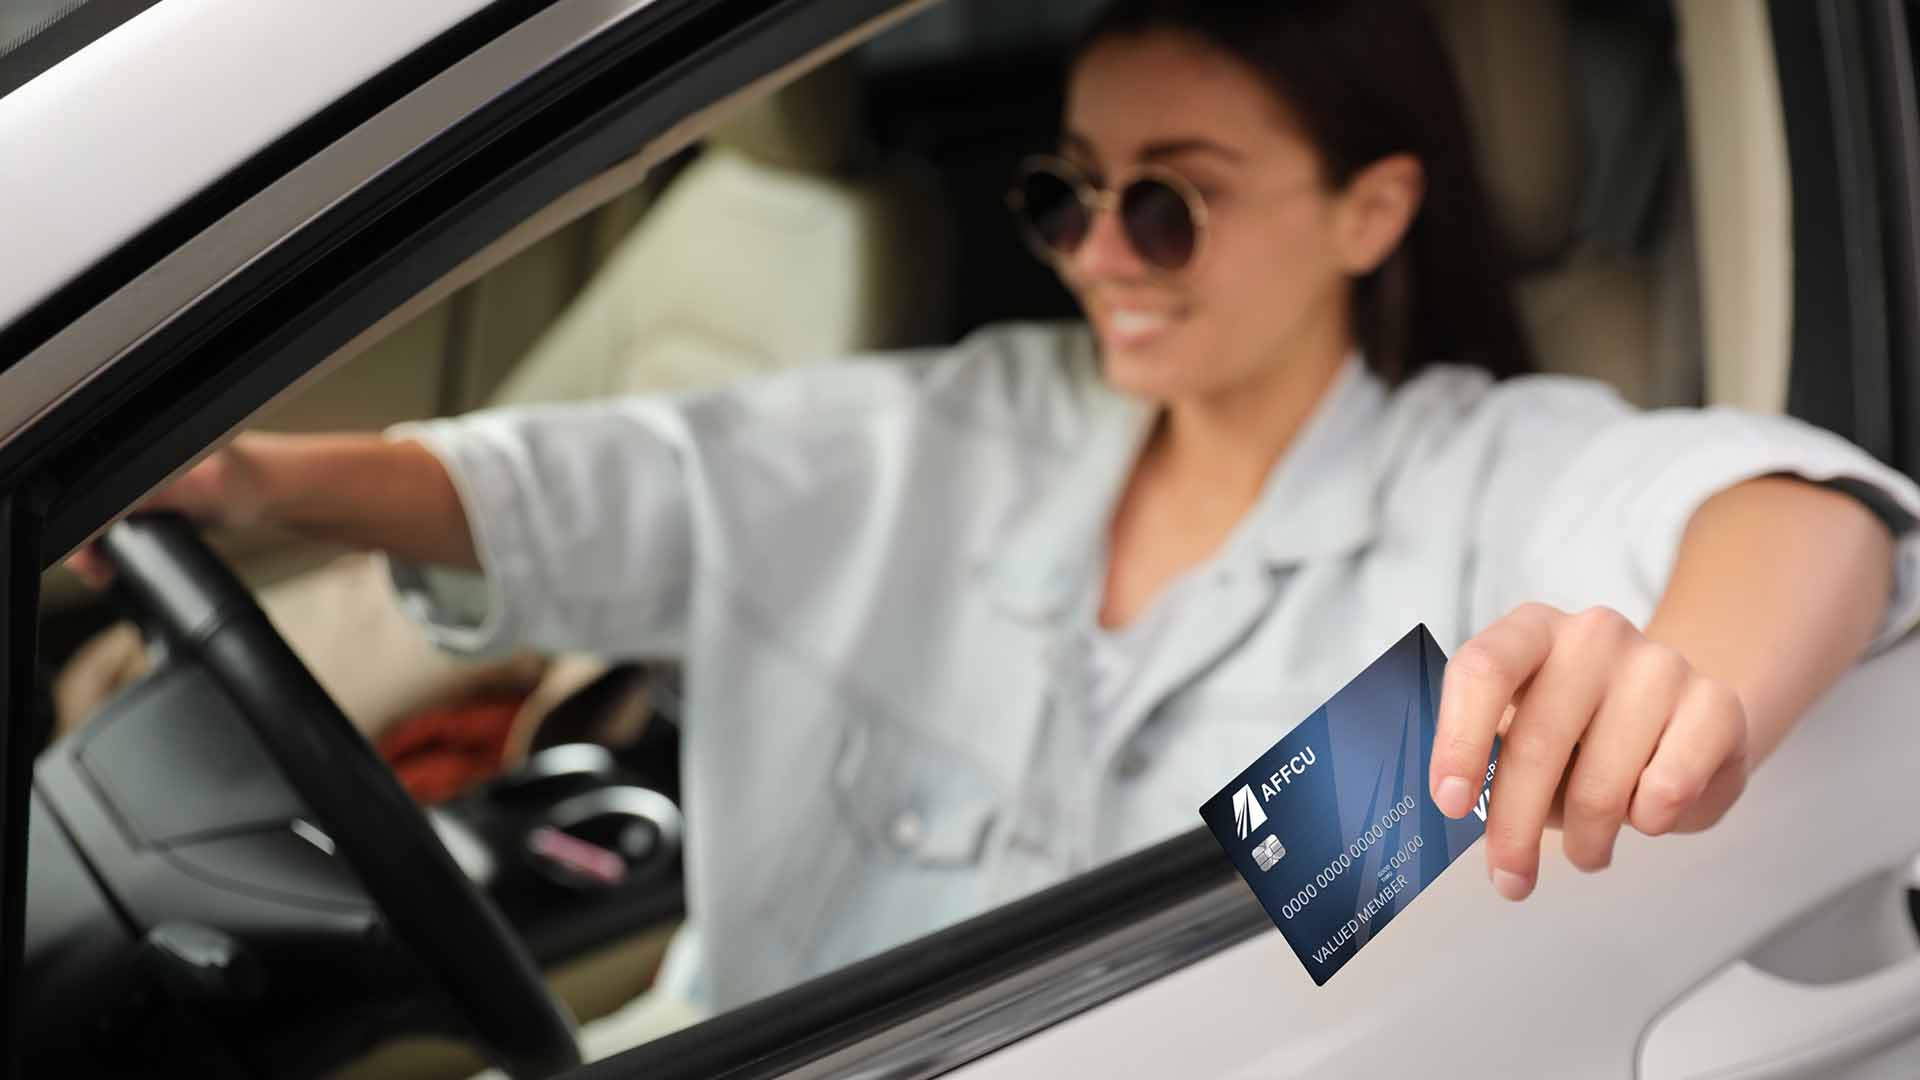 Woman in car with debit card